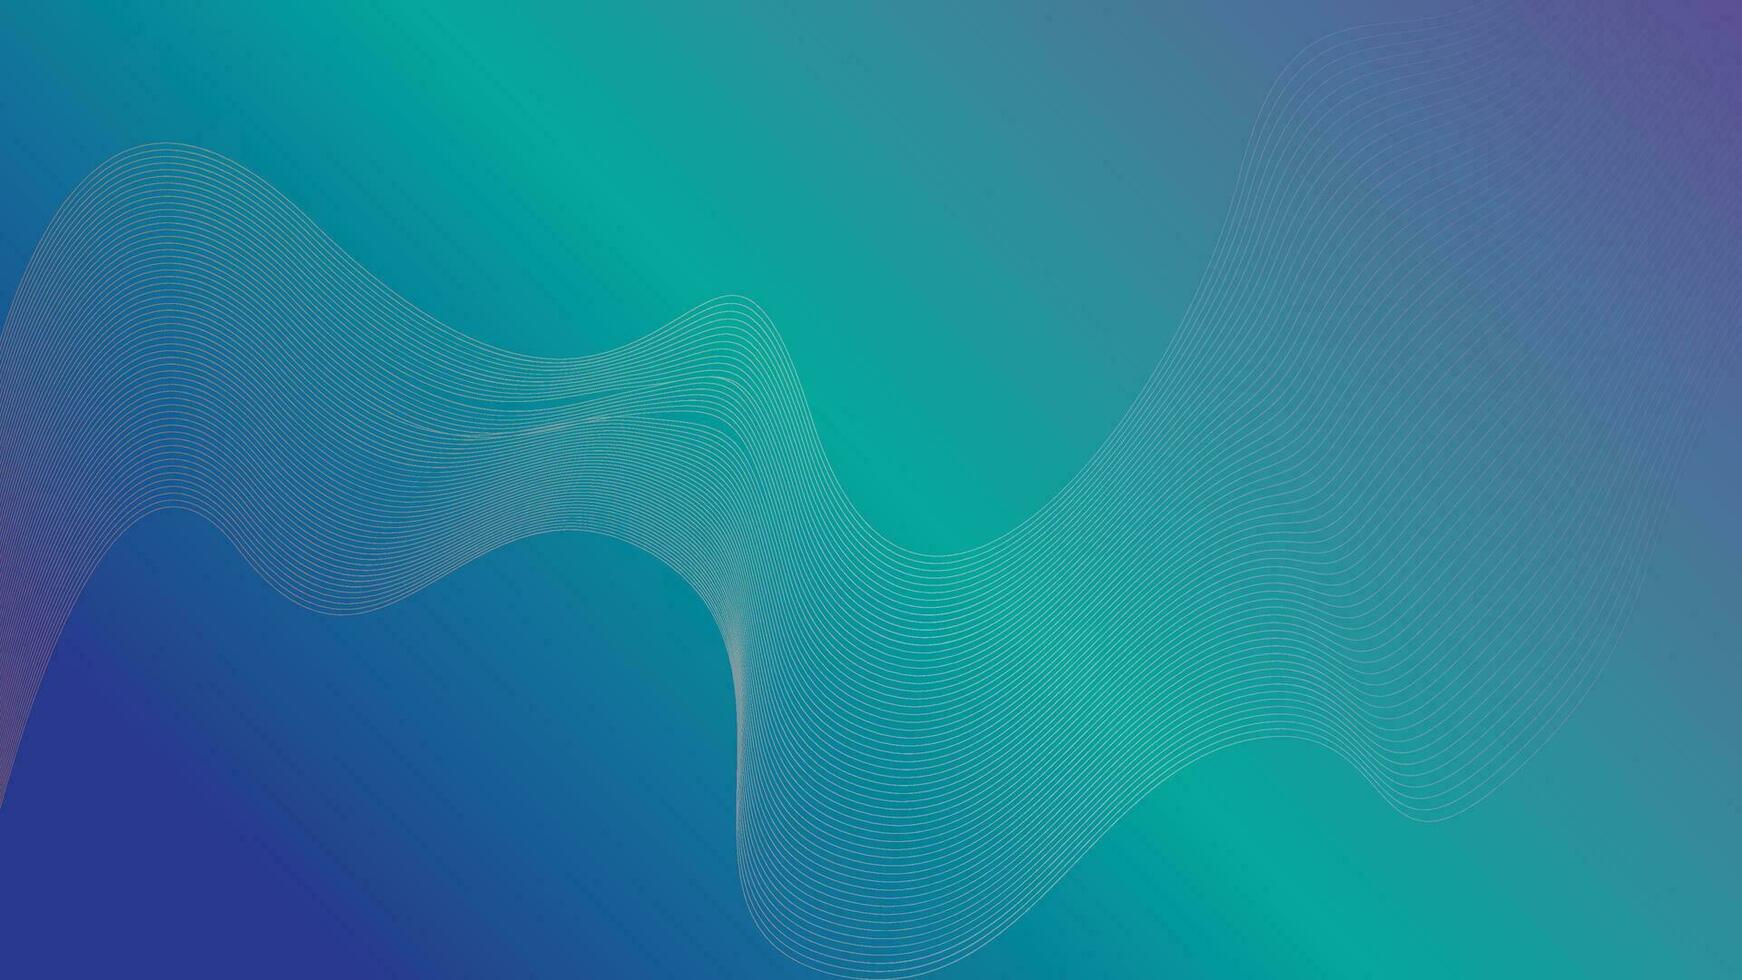 4k gradient blue with blend line background vector